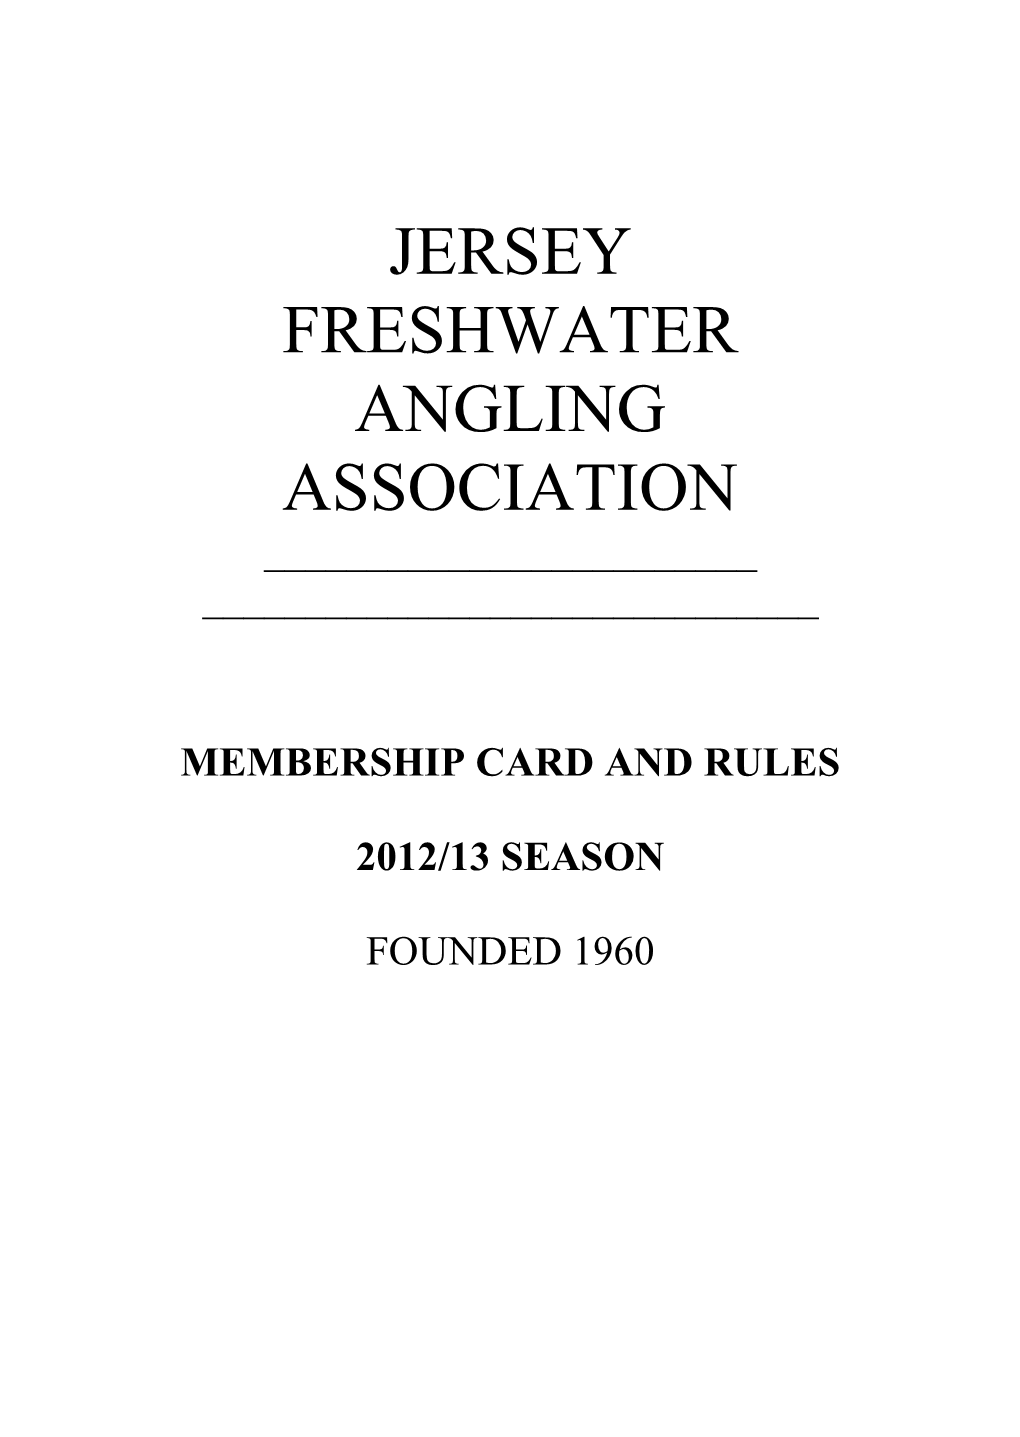 Membership Card and Rules